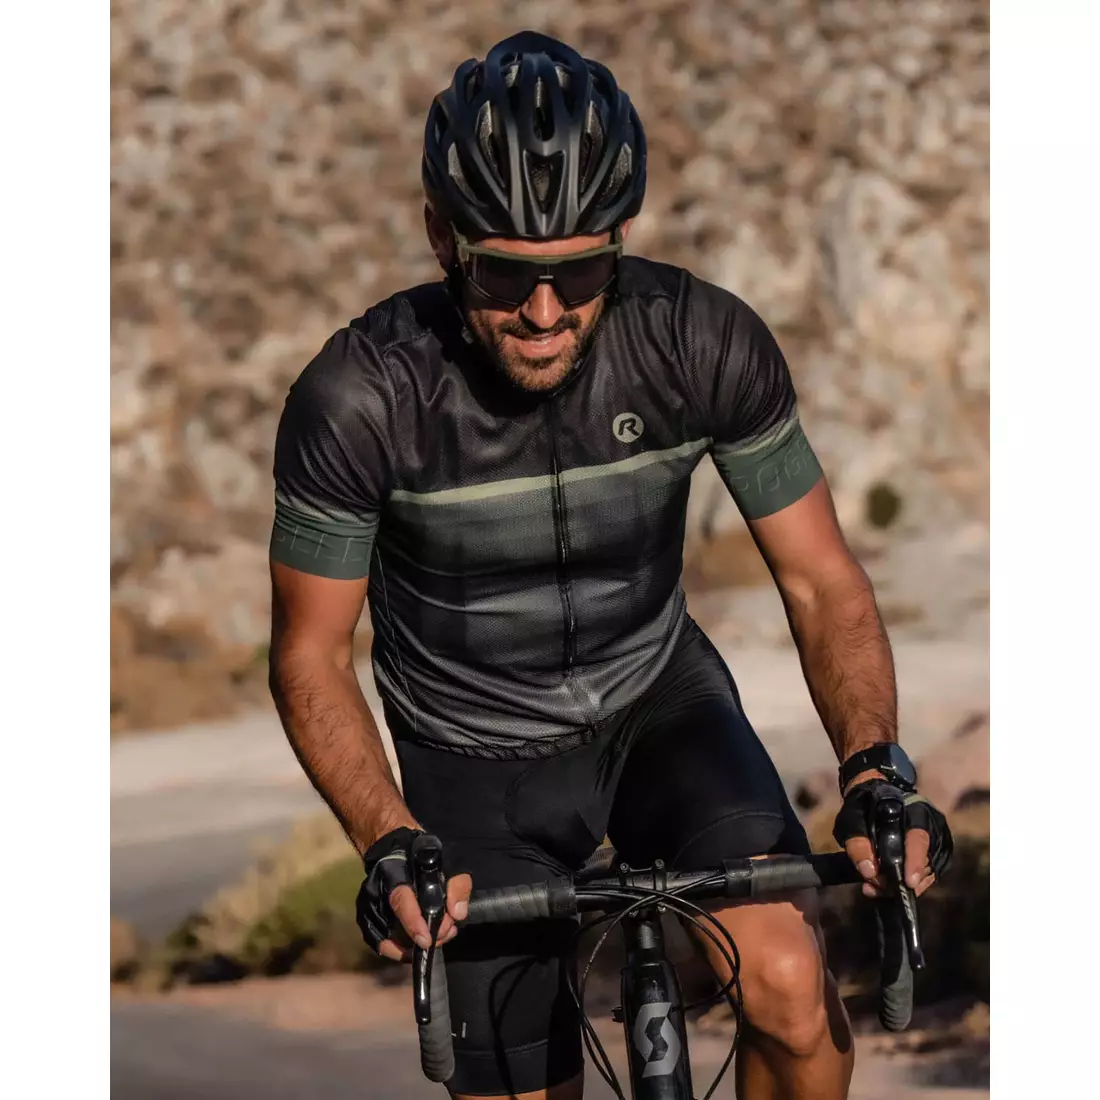 Rogelli HERO II men's cycling jersey, black and green